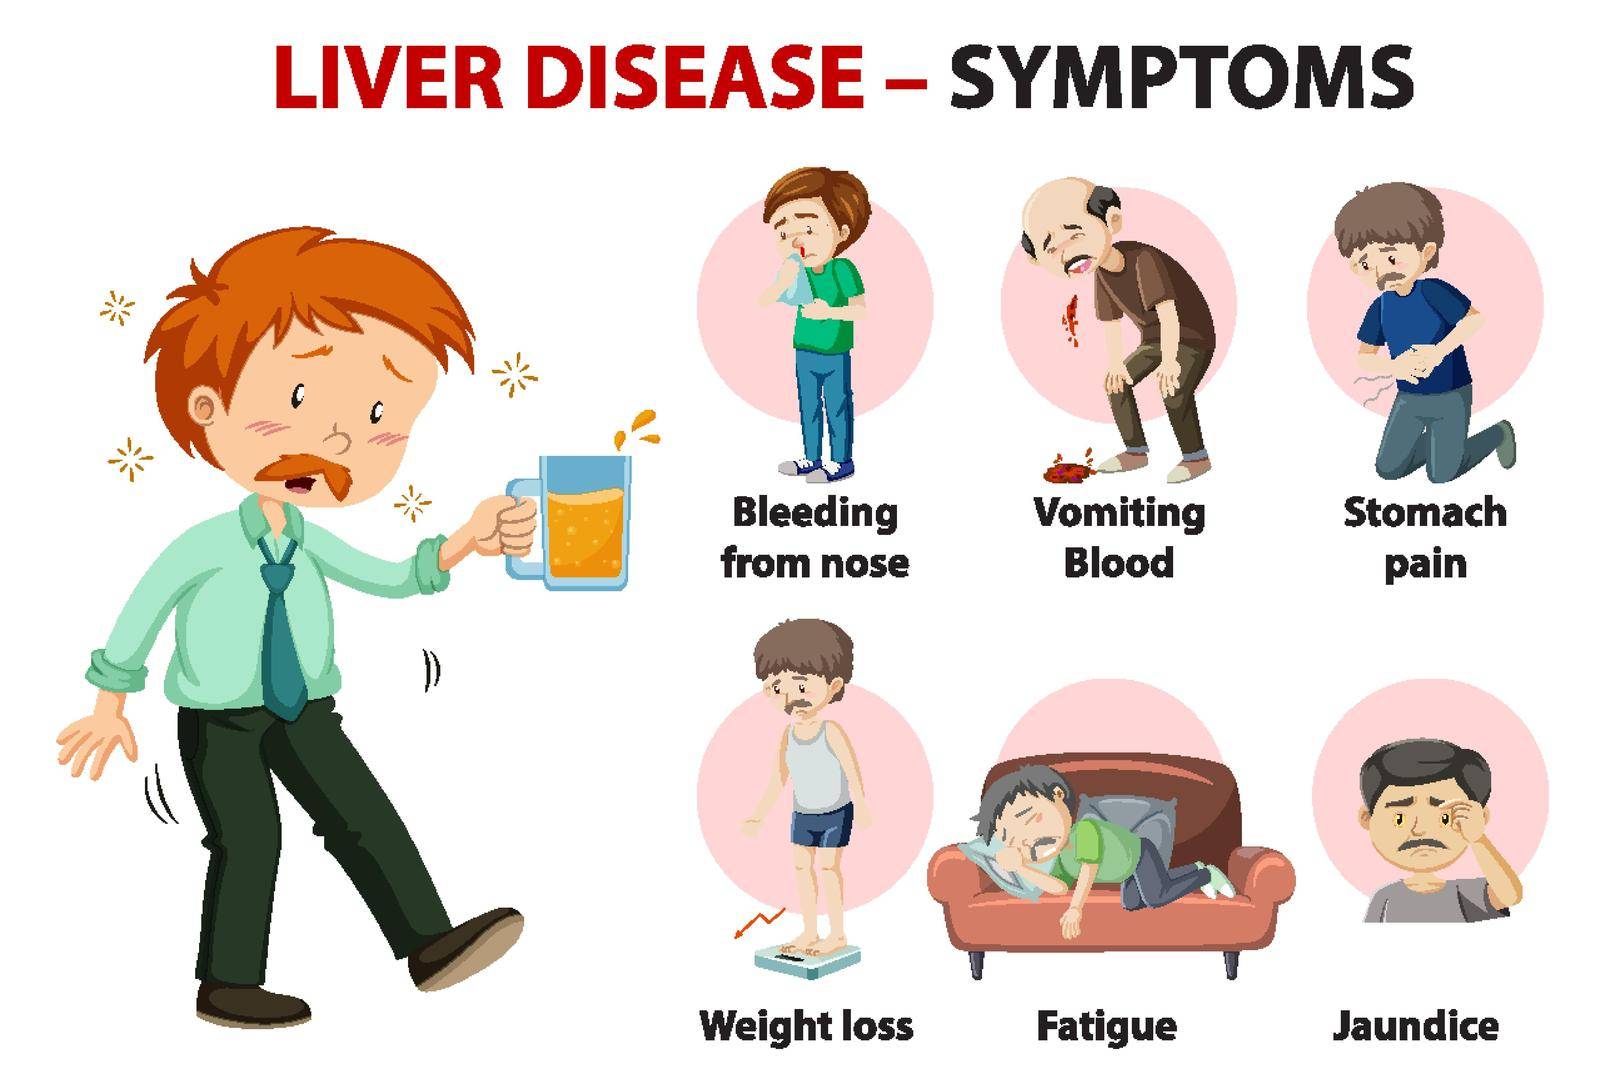 Liver disease symptoms cartoon style cartoon style infographic illustration